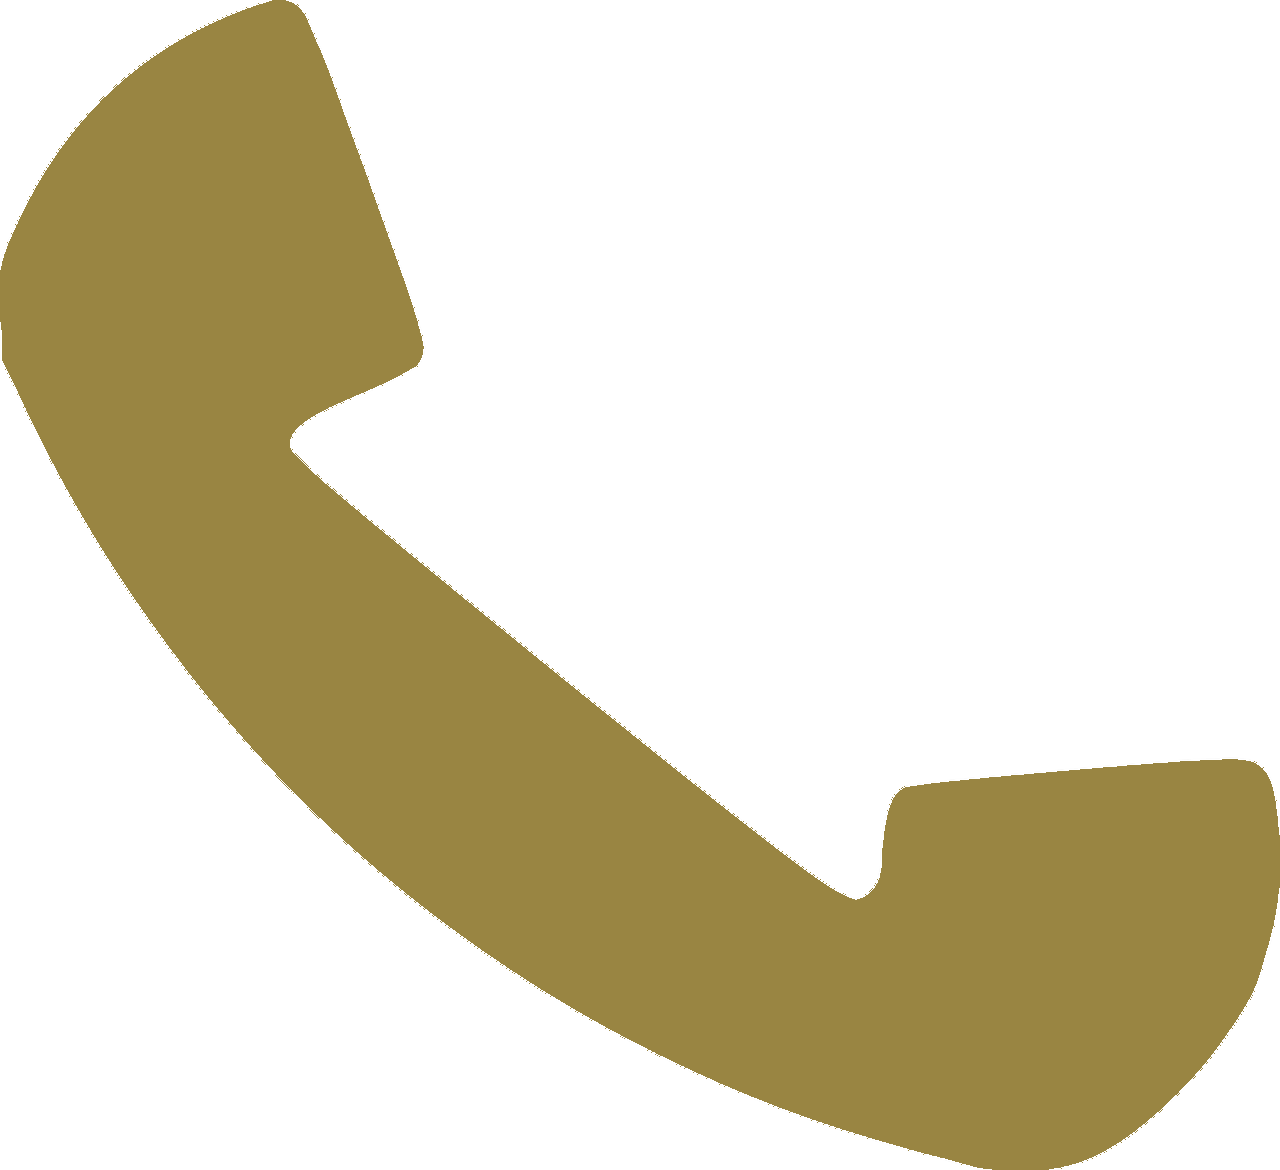 Golden image of telephone